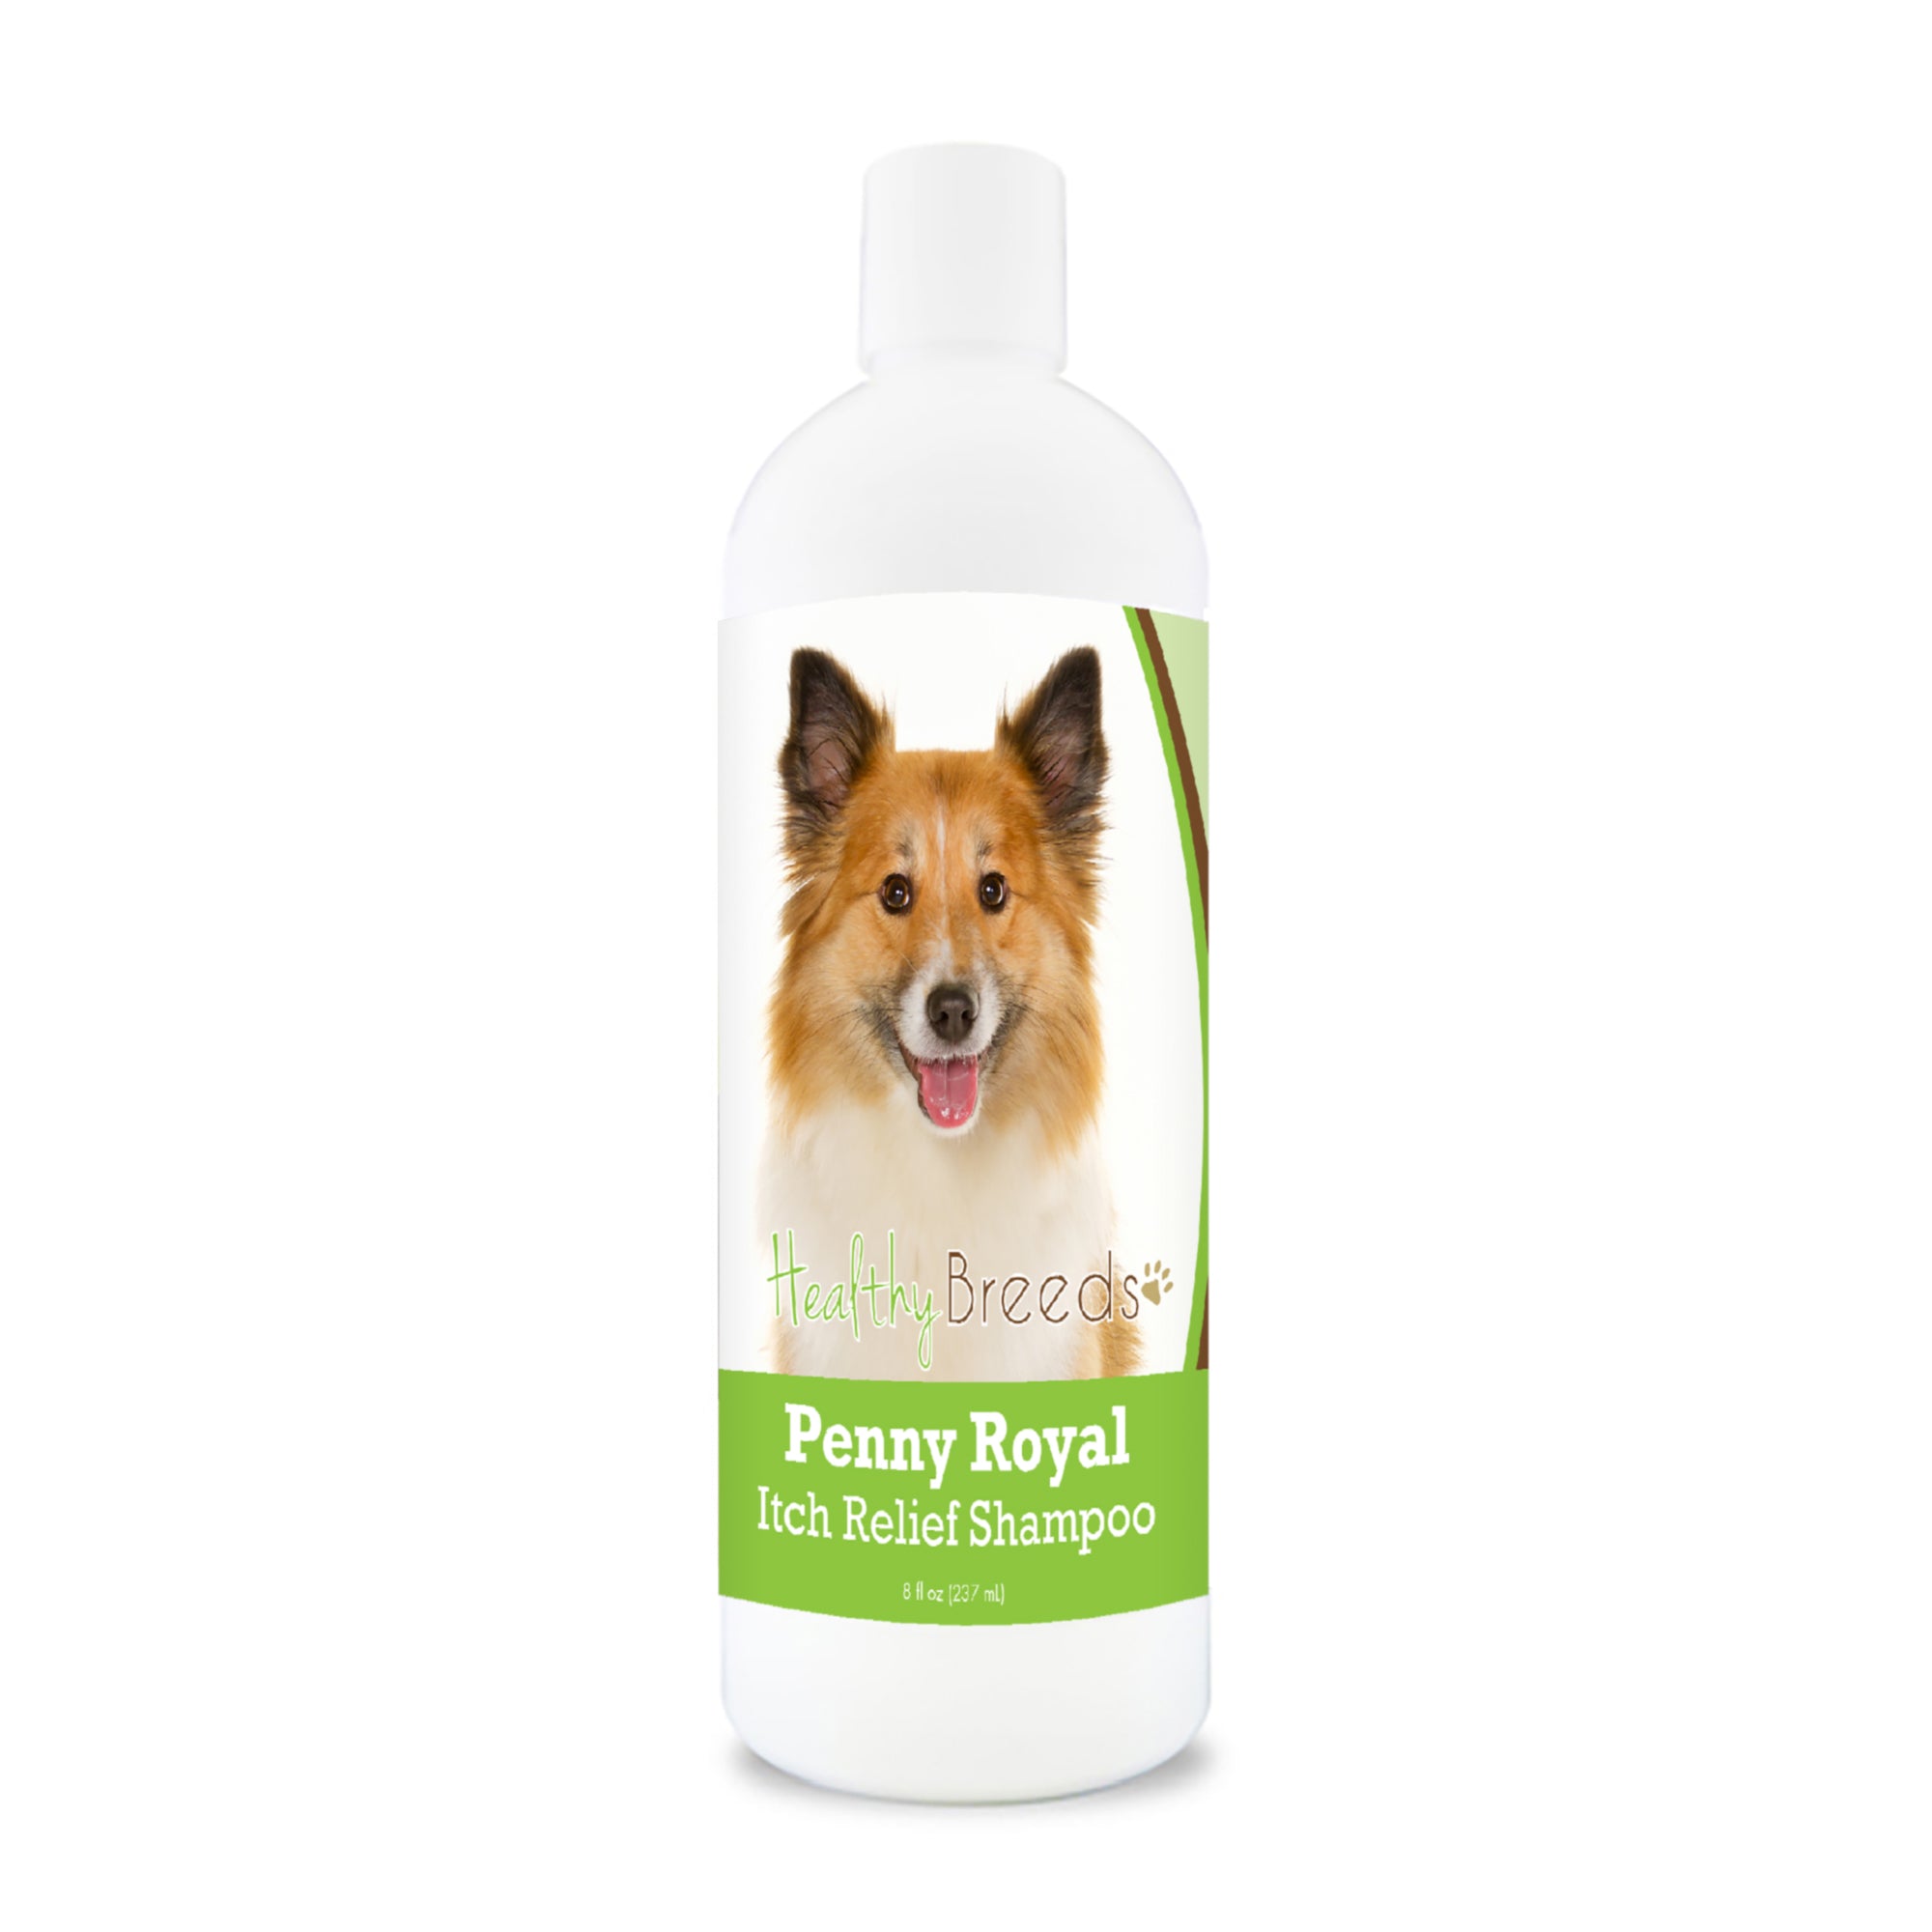 Icelandic Sheepdog Penny Royal Itch Relief Shampoo 8 oz